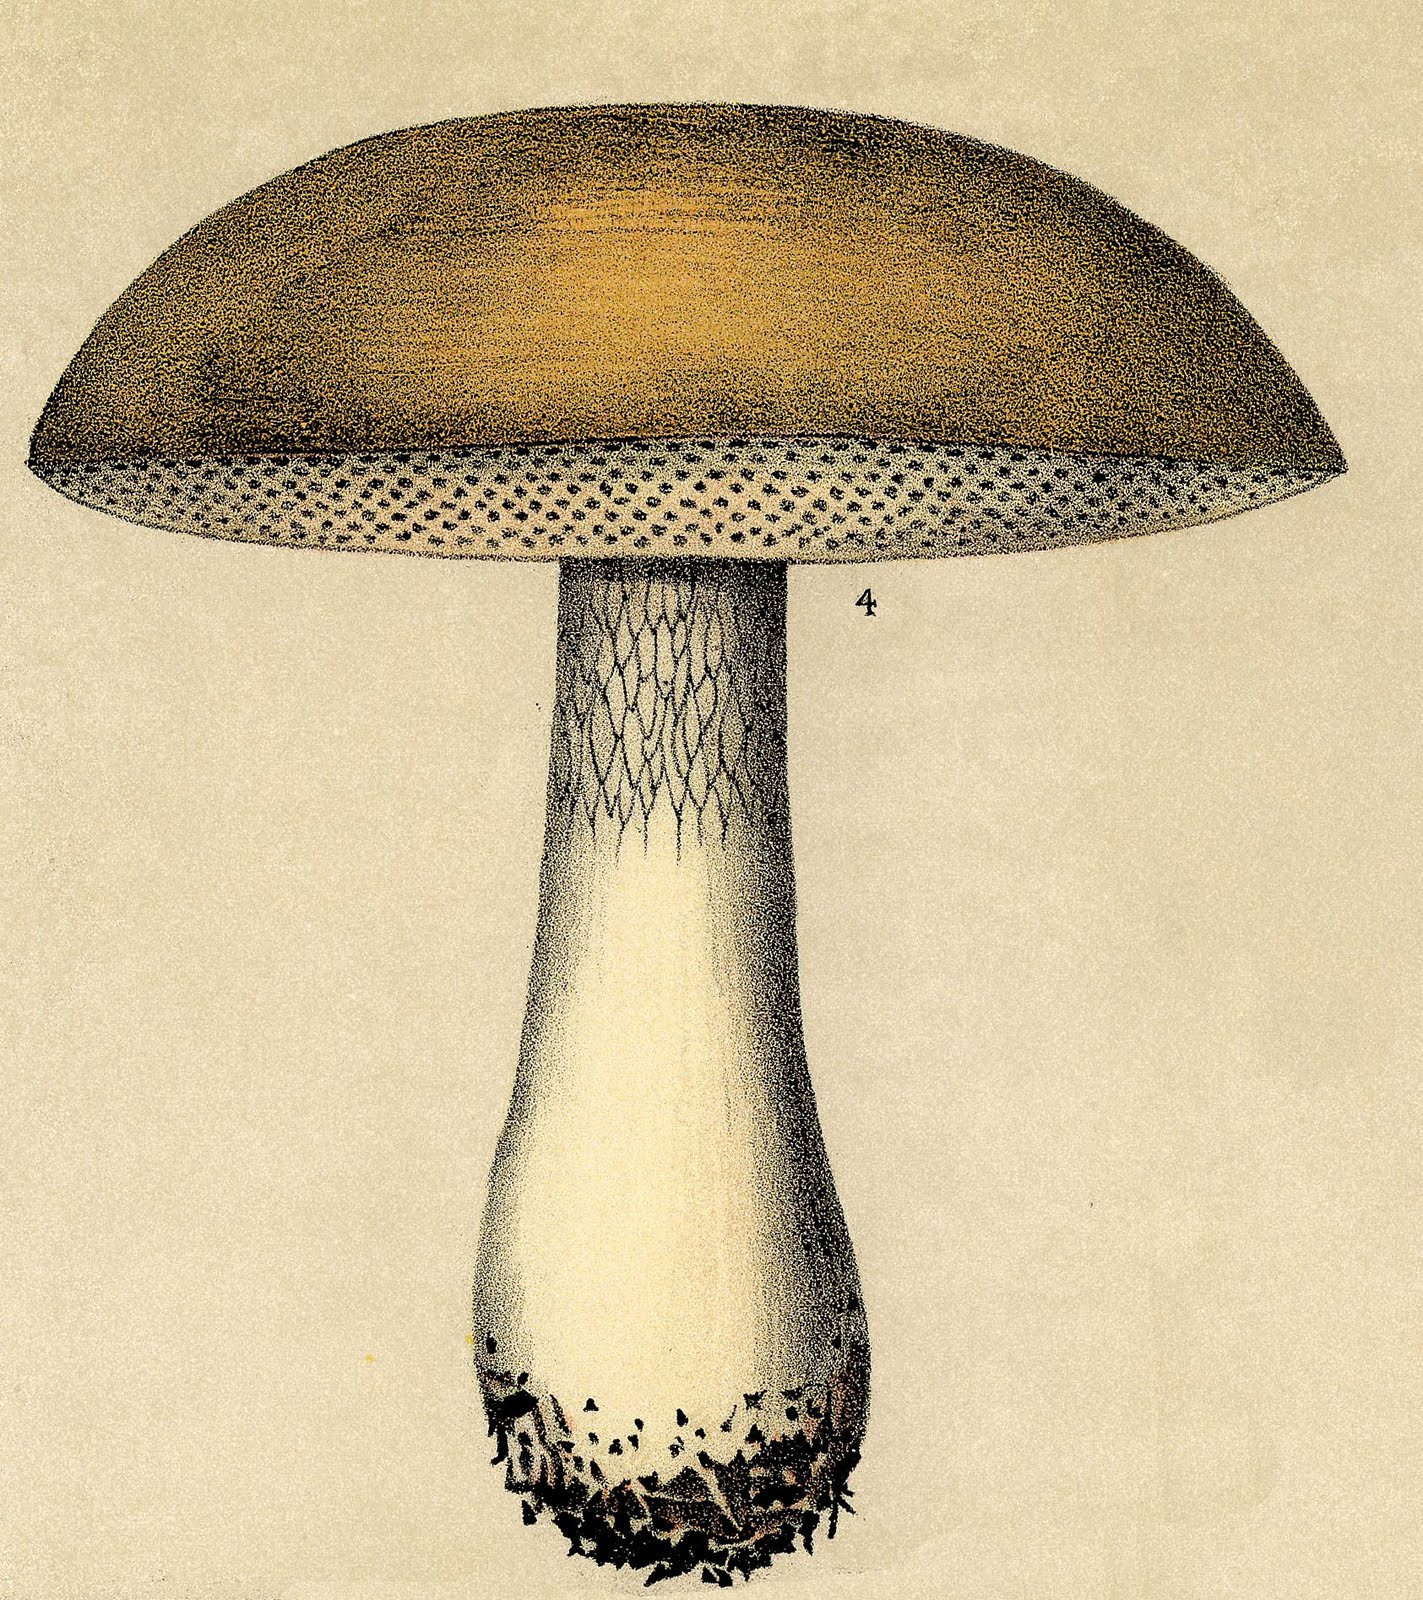 mushroom clipart black and white - photo #36